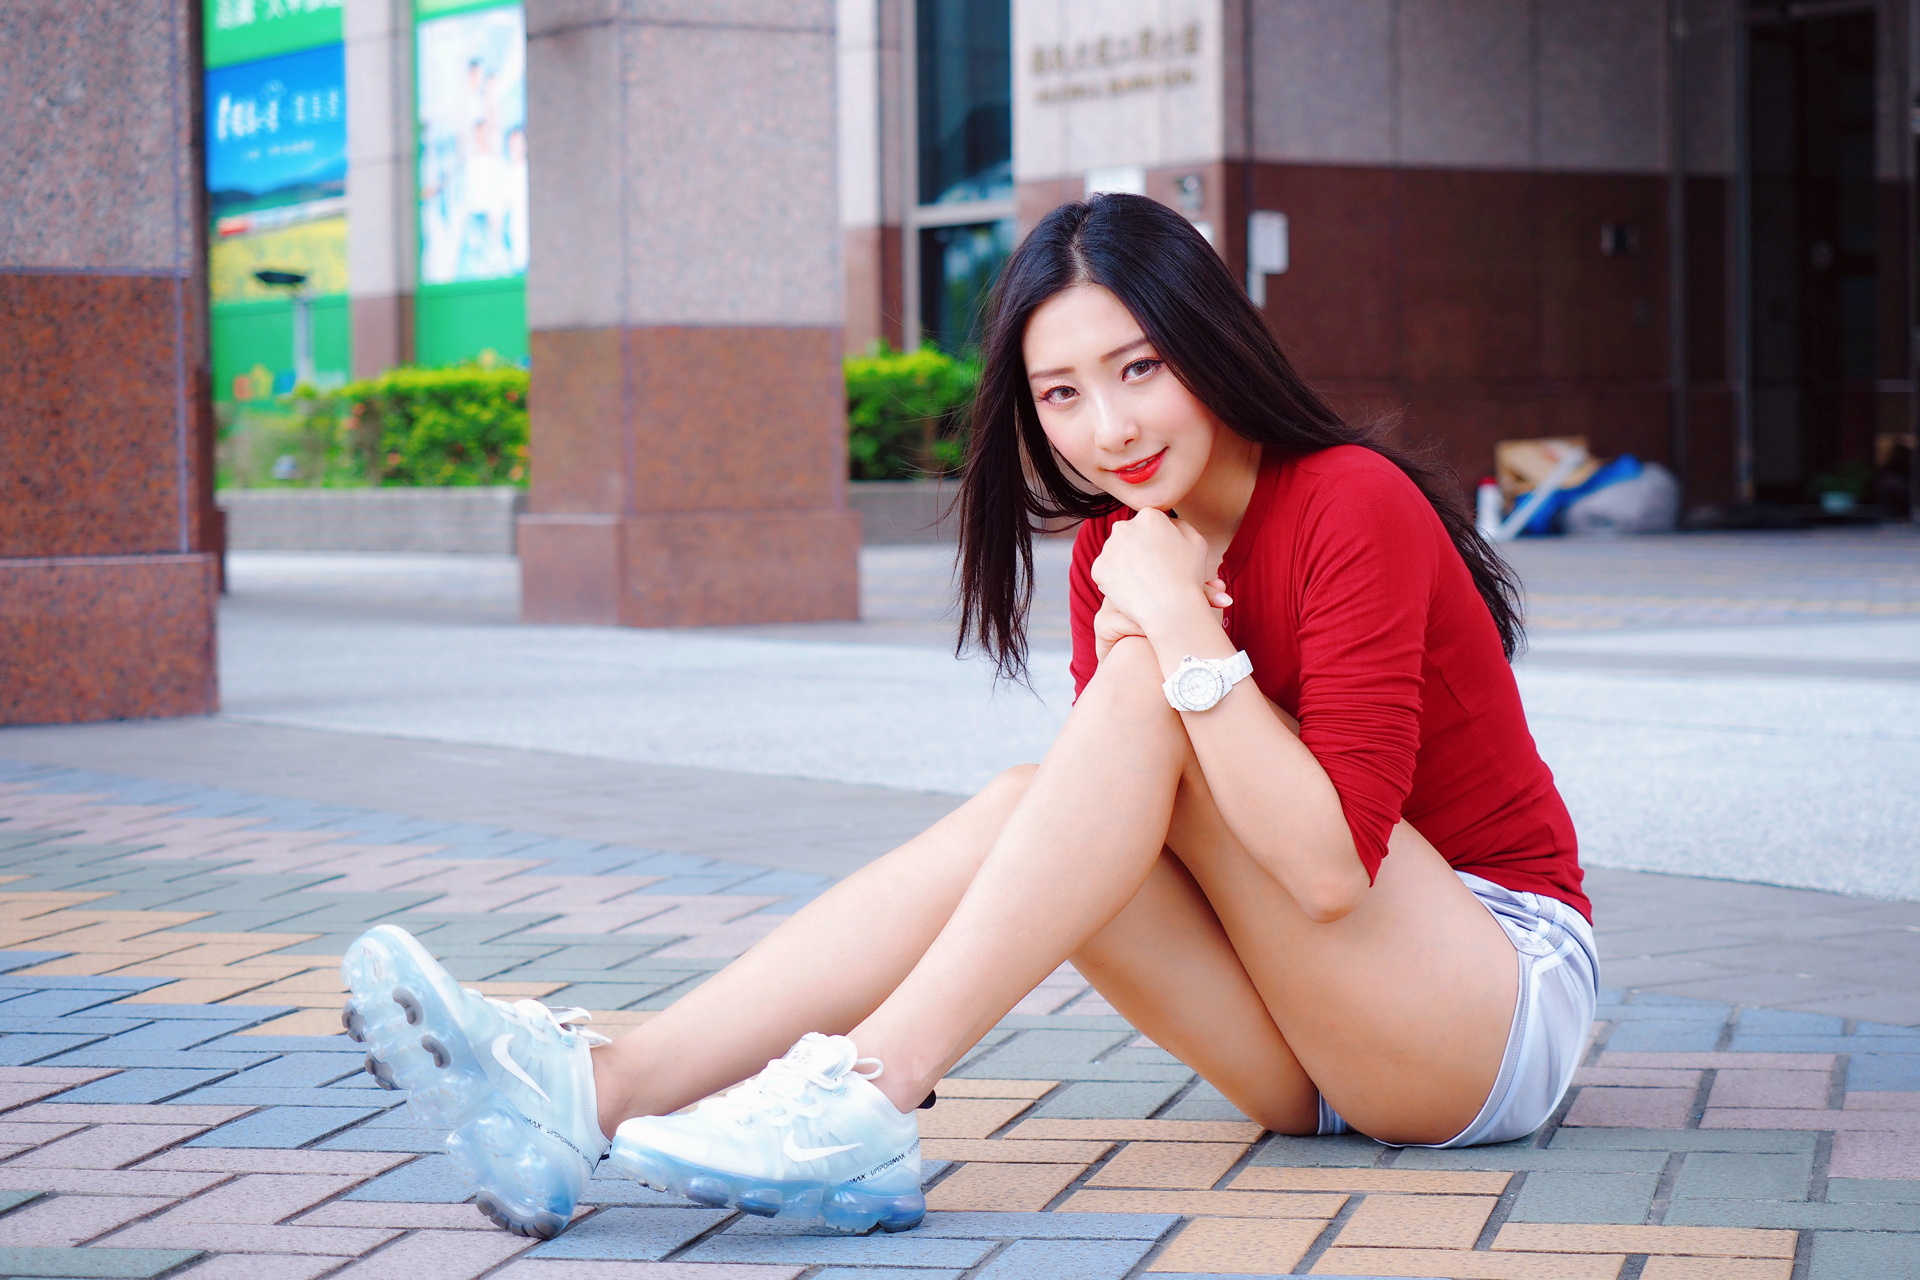 Asian Model Women Long Hair Dark Hair Sitting Legs Sneakers No Socks 1920x1280